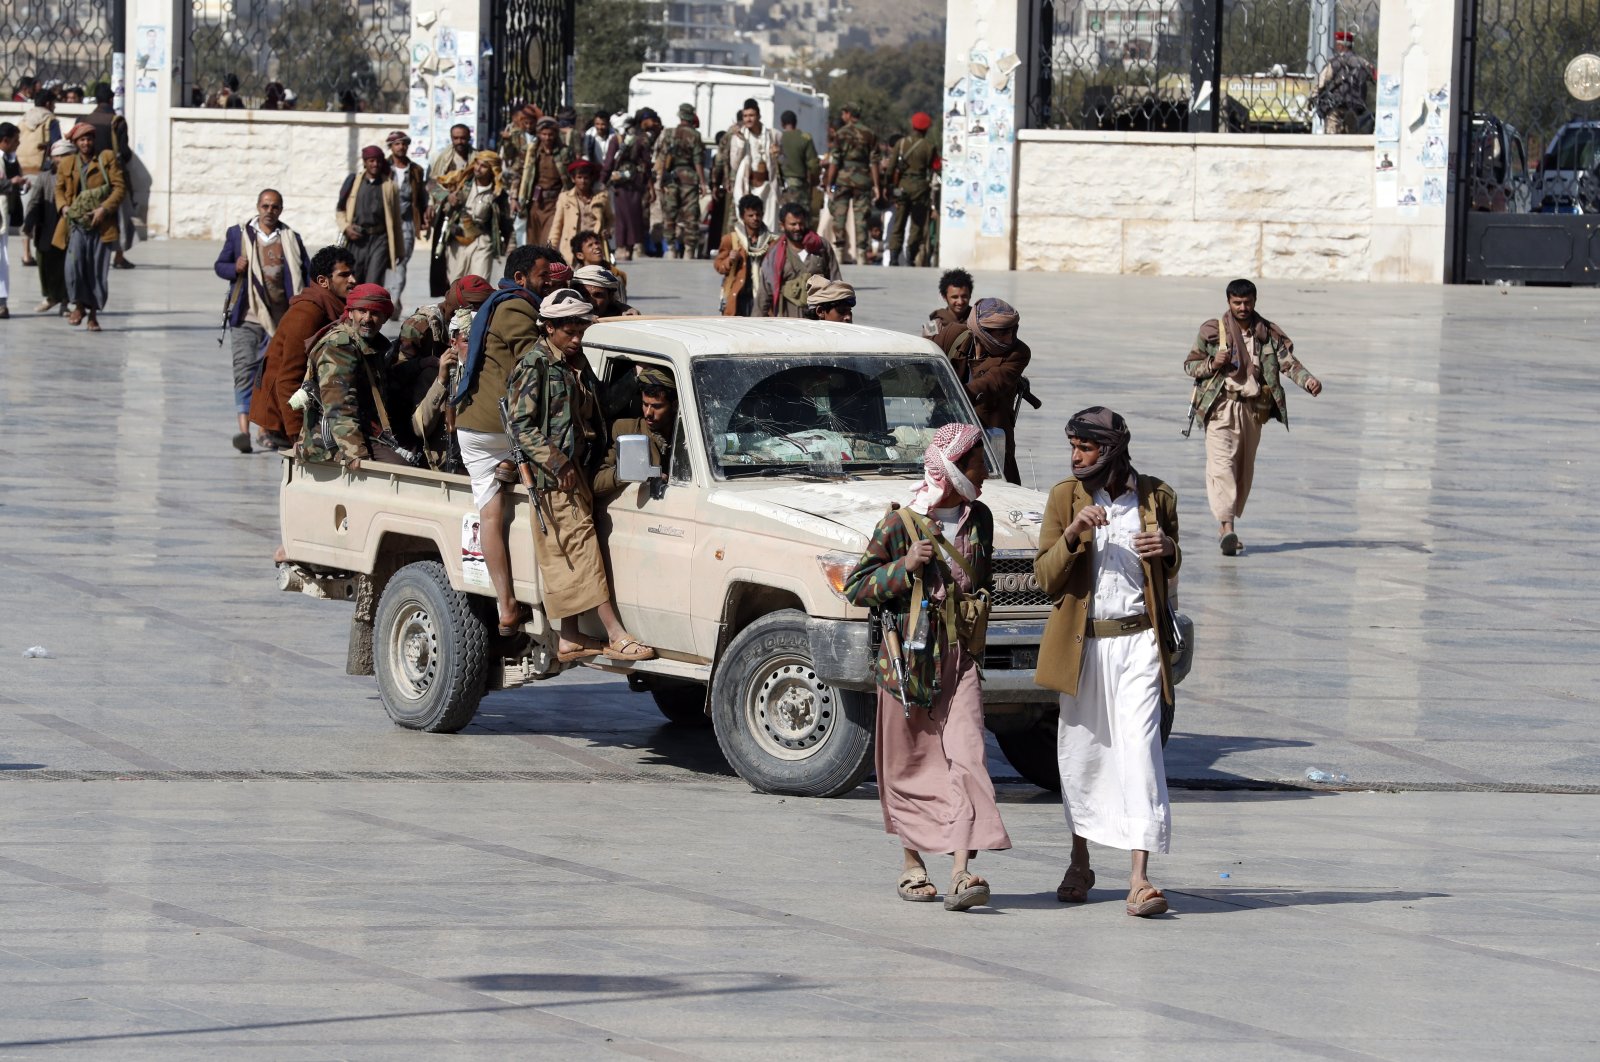 Iran-backed armed Houthi militia seen in Sanaa, Yemen, Feb. 16, 2021. (EPA Photo)